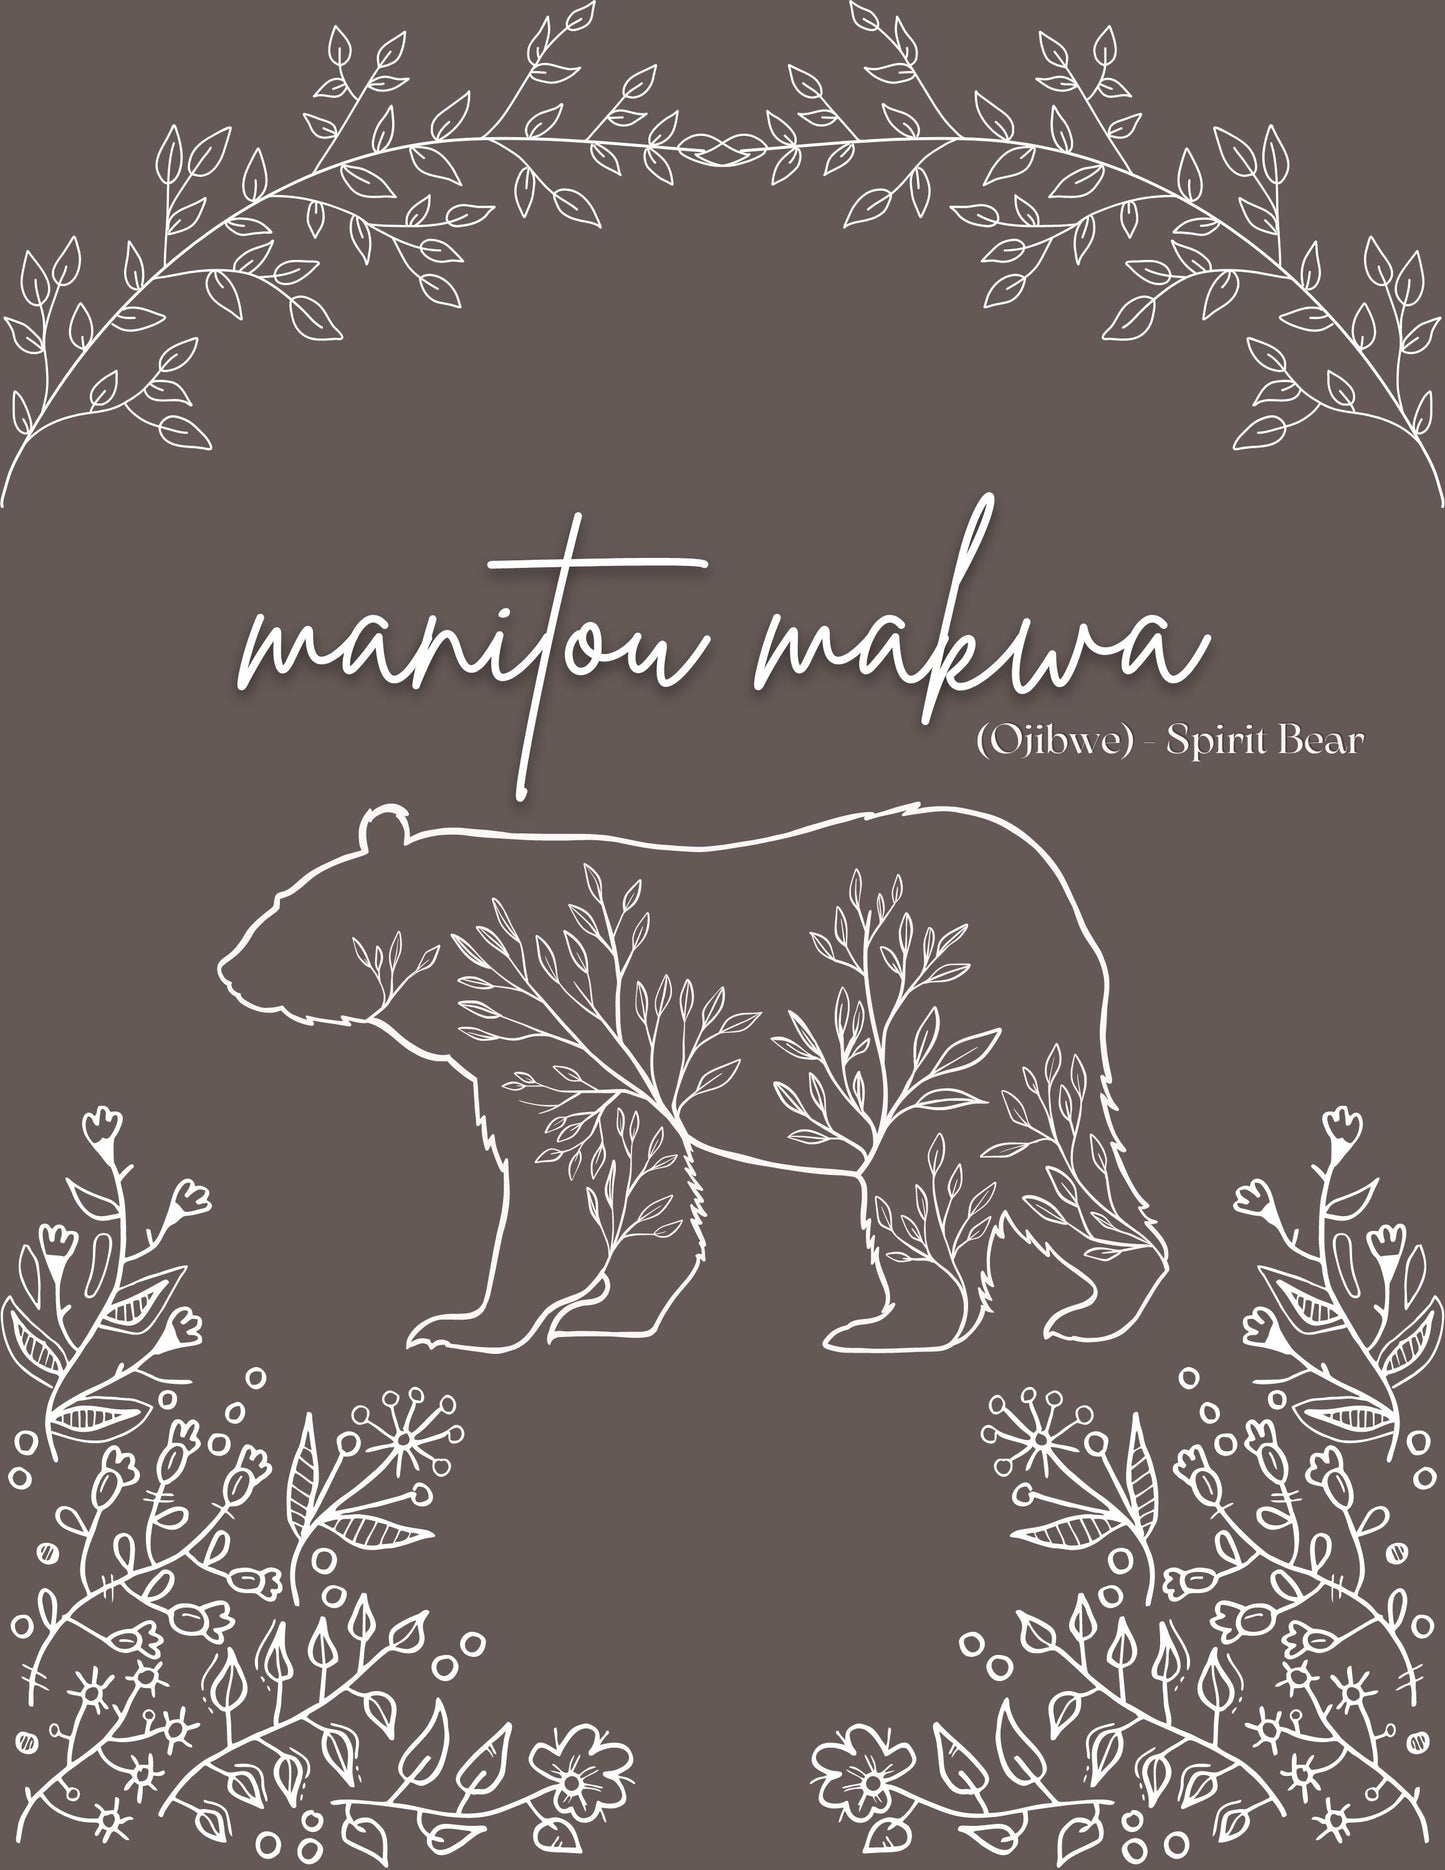 Bear Medicine - Manitou Makwa - Anishinaabe Spirit Bear Contemporary Art Print